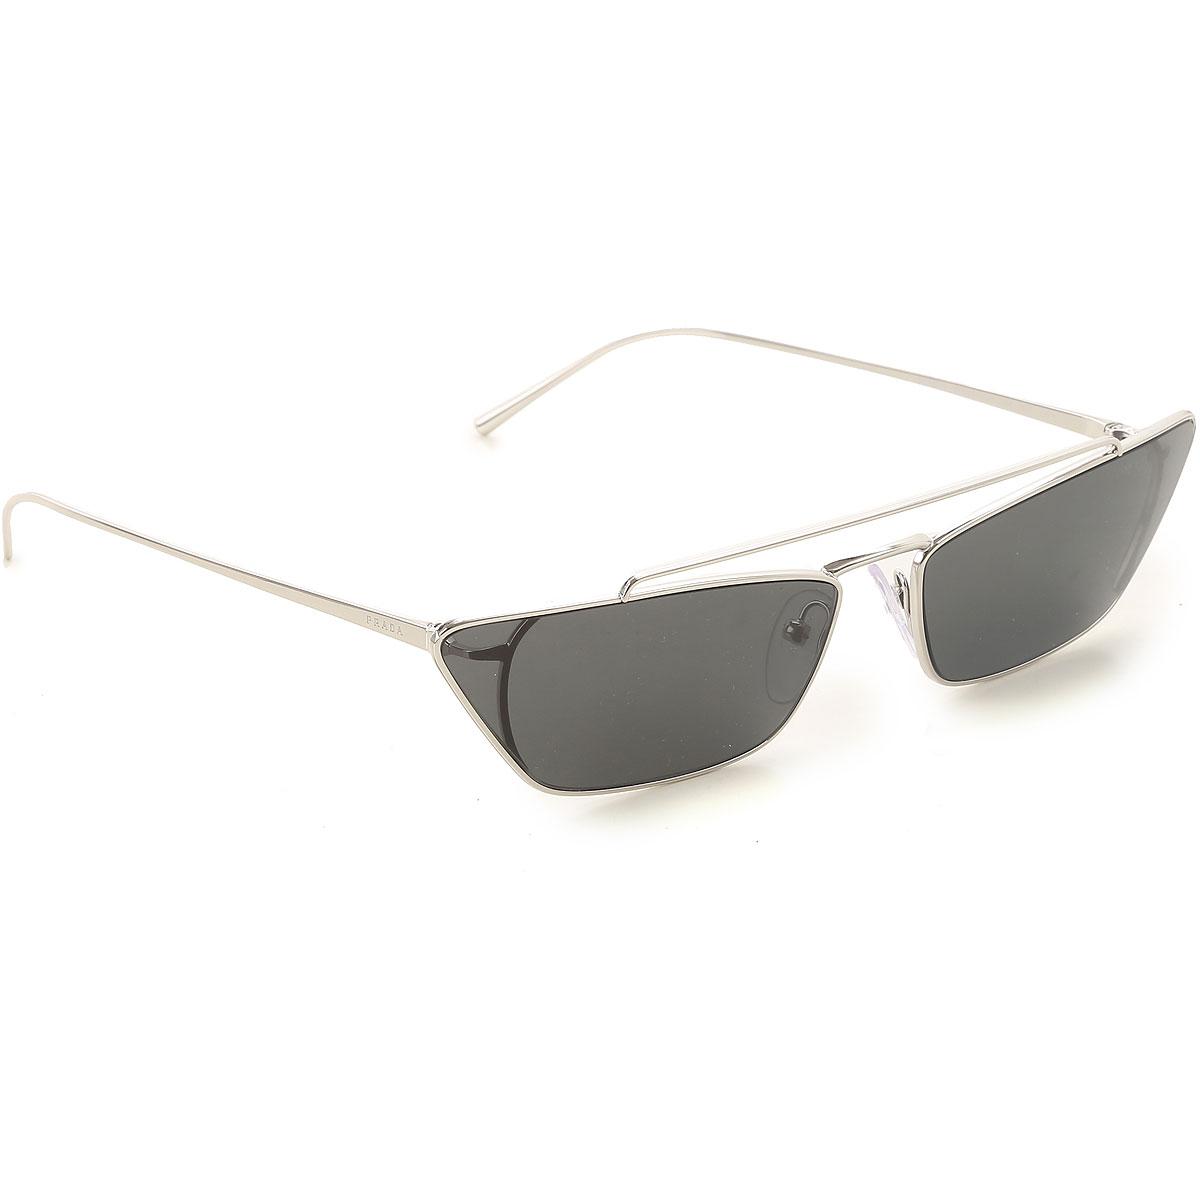 Prada Sunglasses On Sale in Silver (Metallic) for Men - Lyst